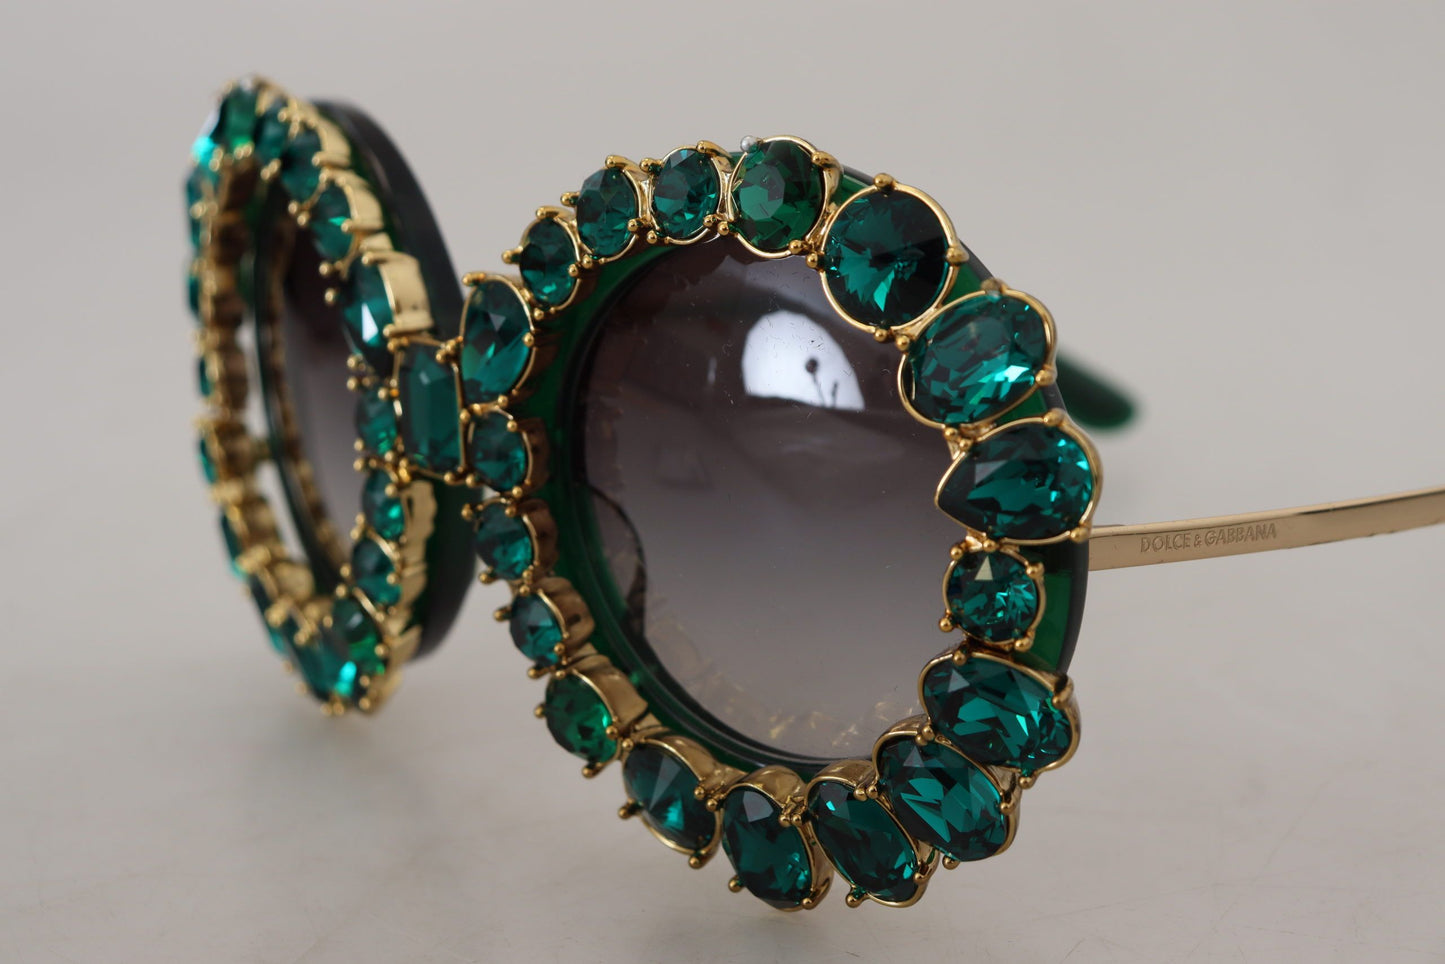 Limited Edition Swarovski Crystal Sunglasses